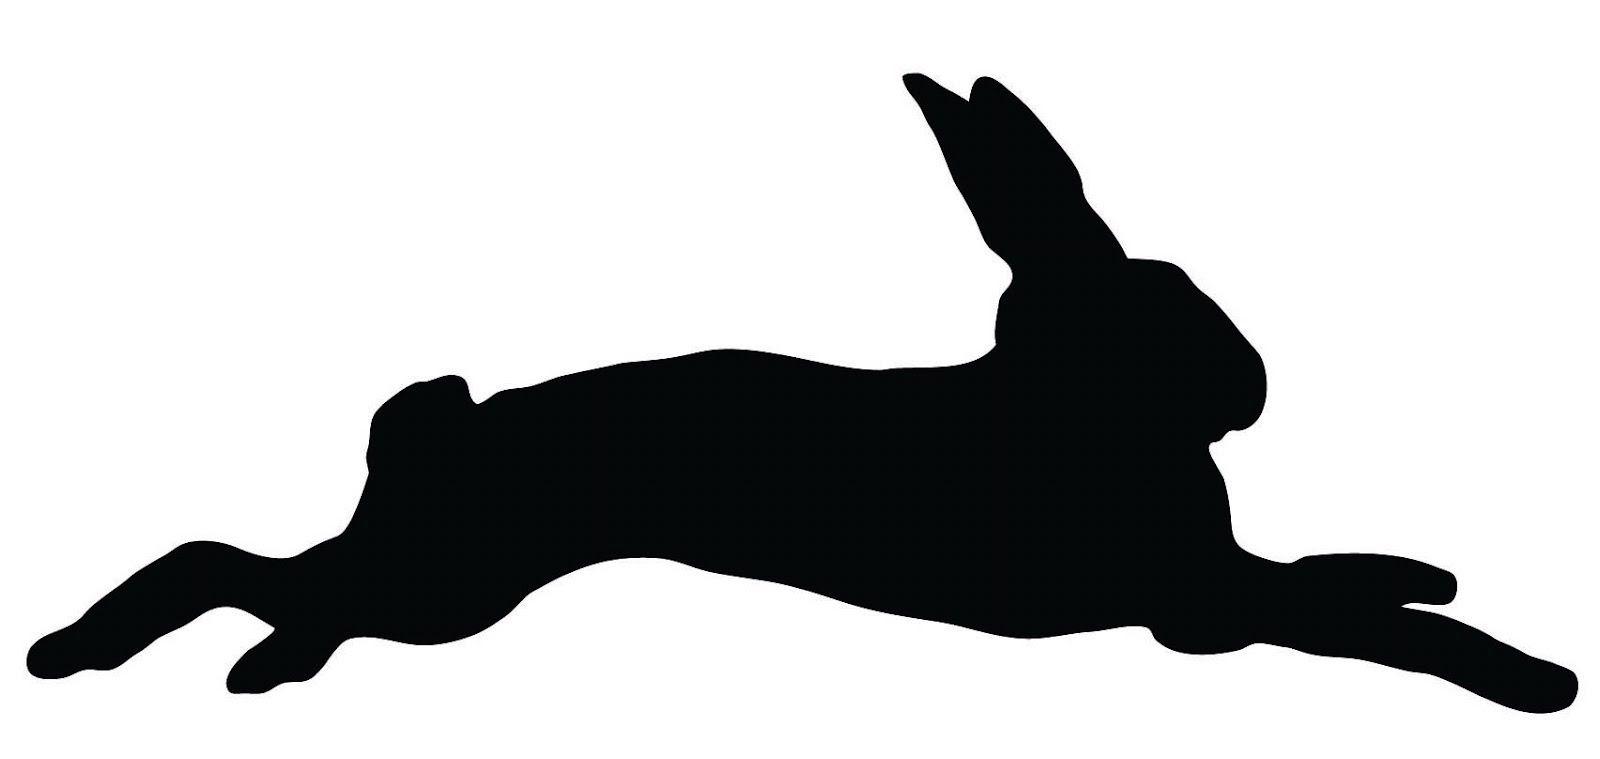 Running Rabbit Logo - Free Fast Rabbit Icon 155396. Download Fast Rabbit Icon